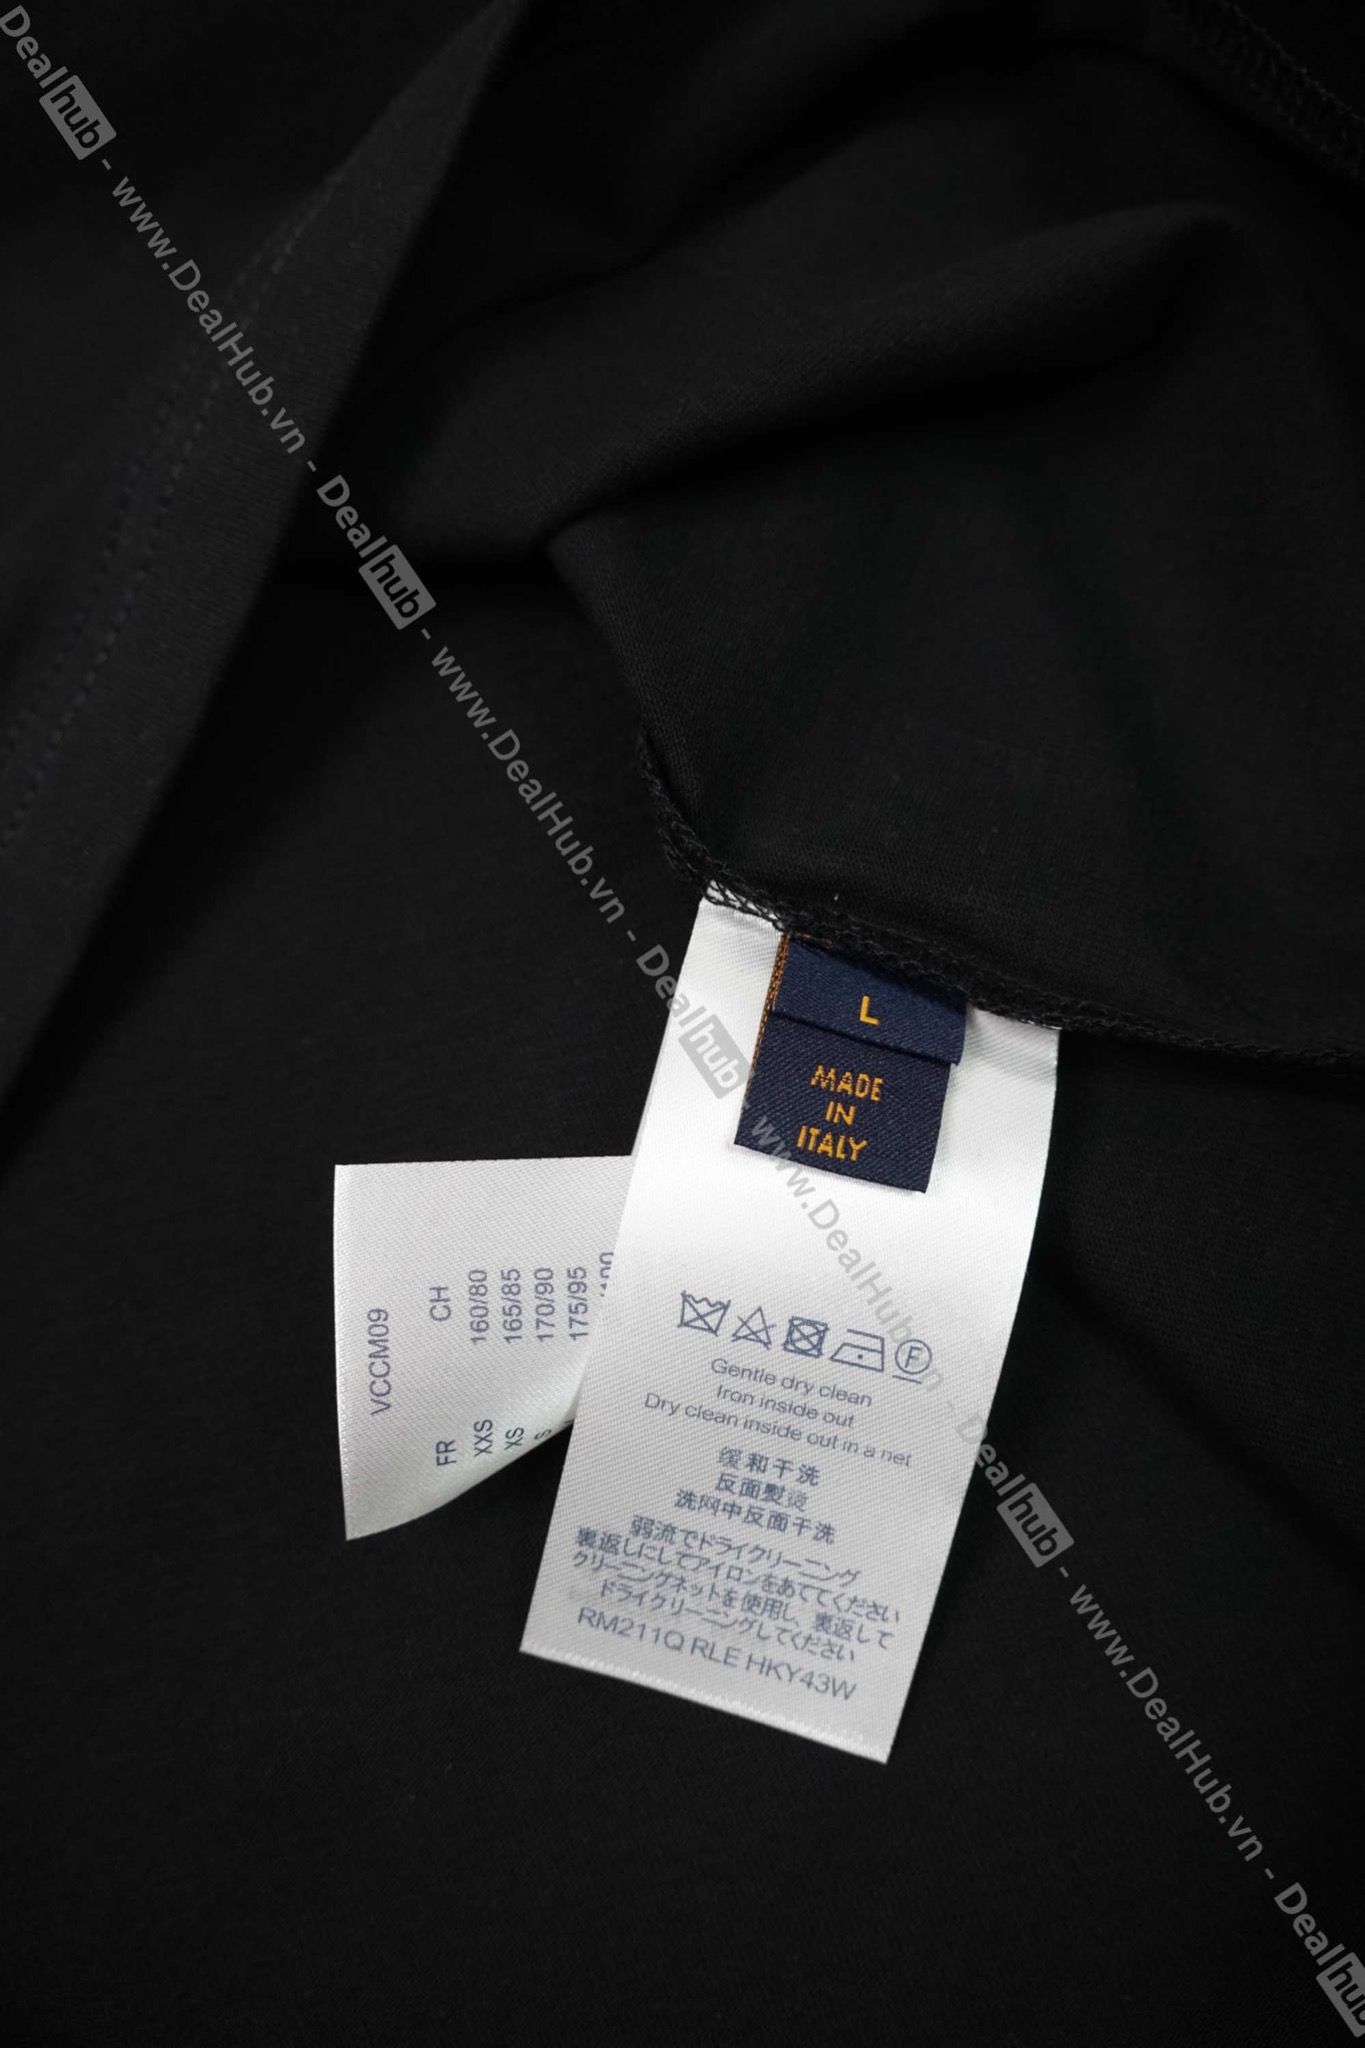 Louis Vuitton Graffiti T-Shirt Black LV004